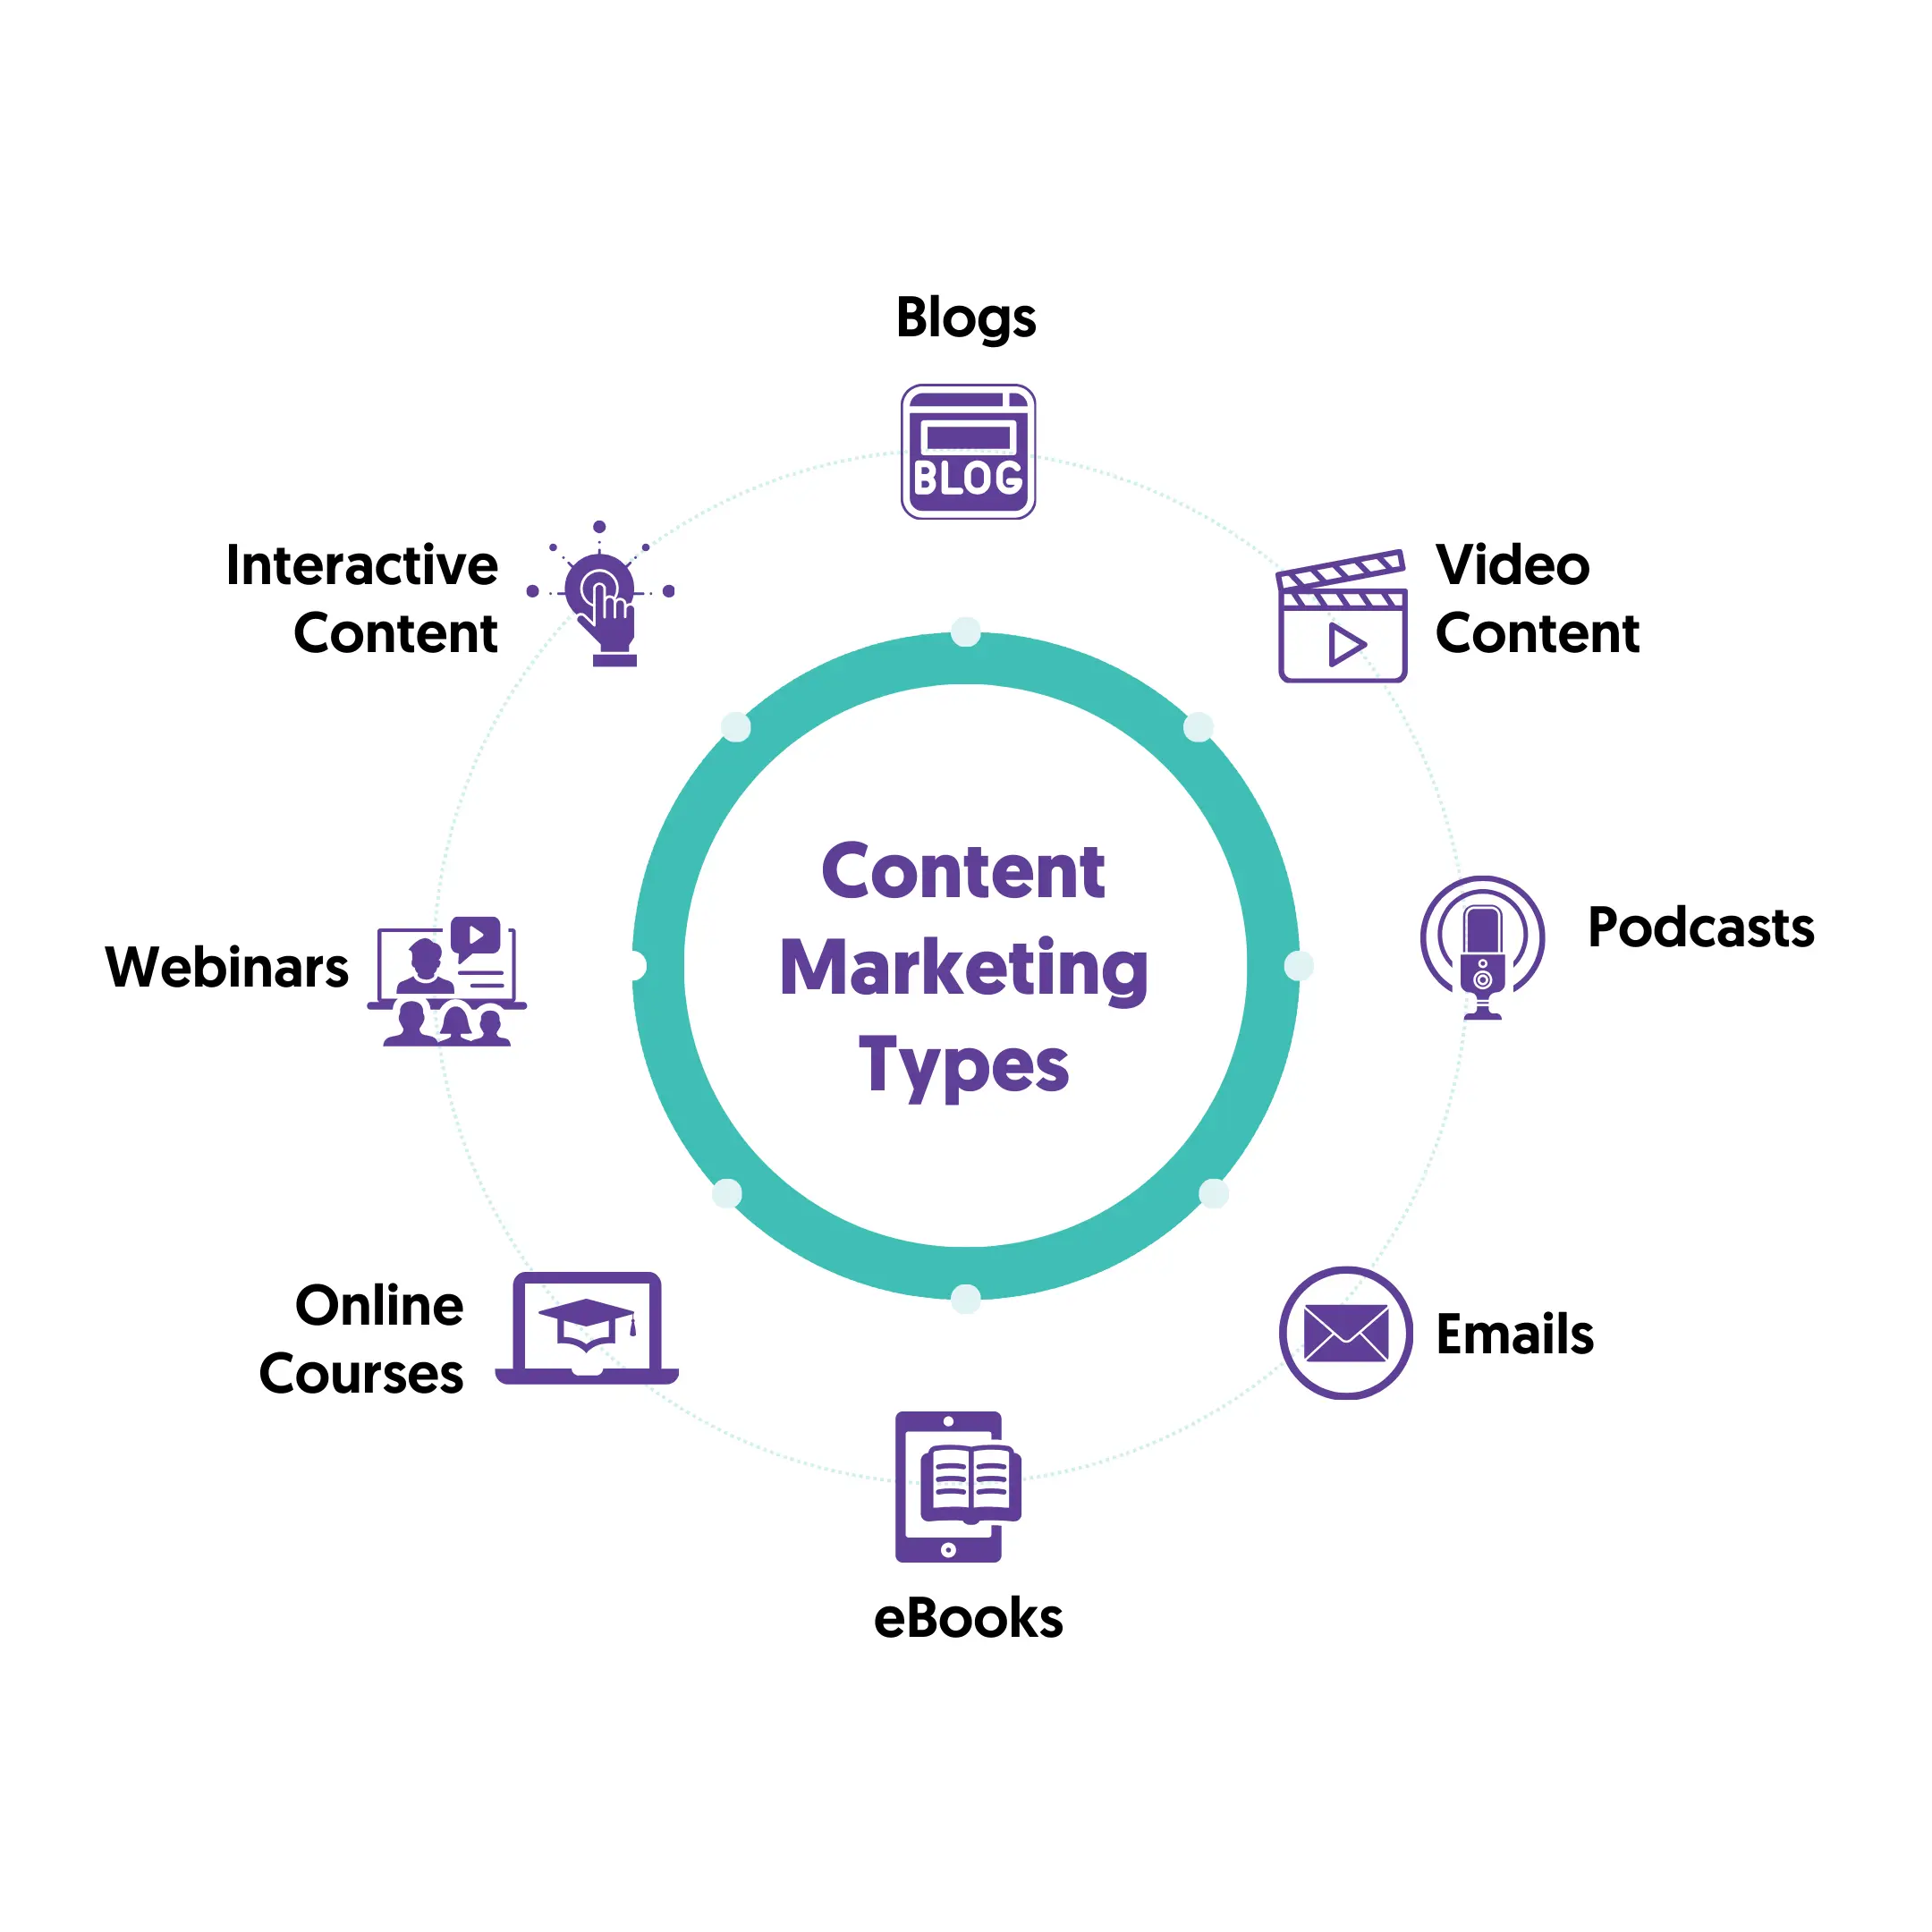 Popular Content Marketing Types